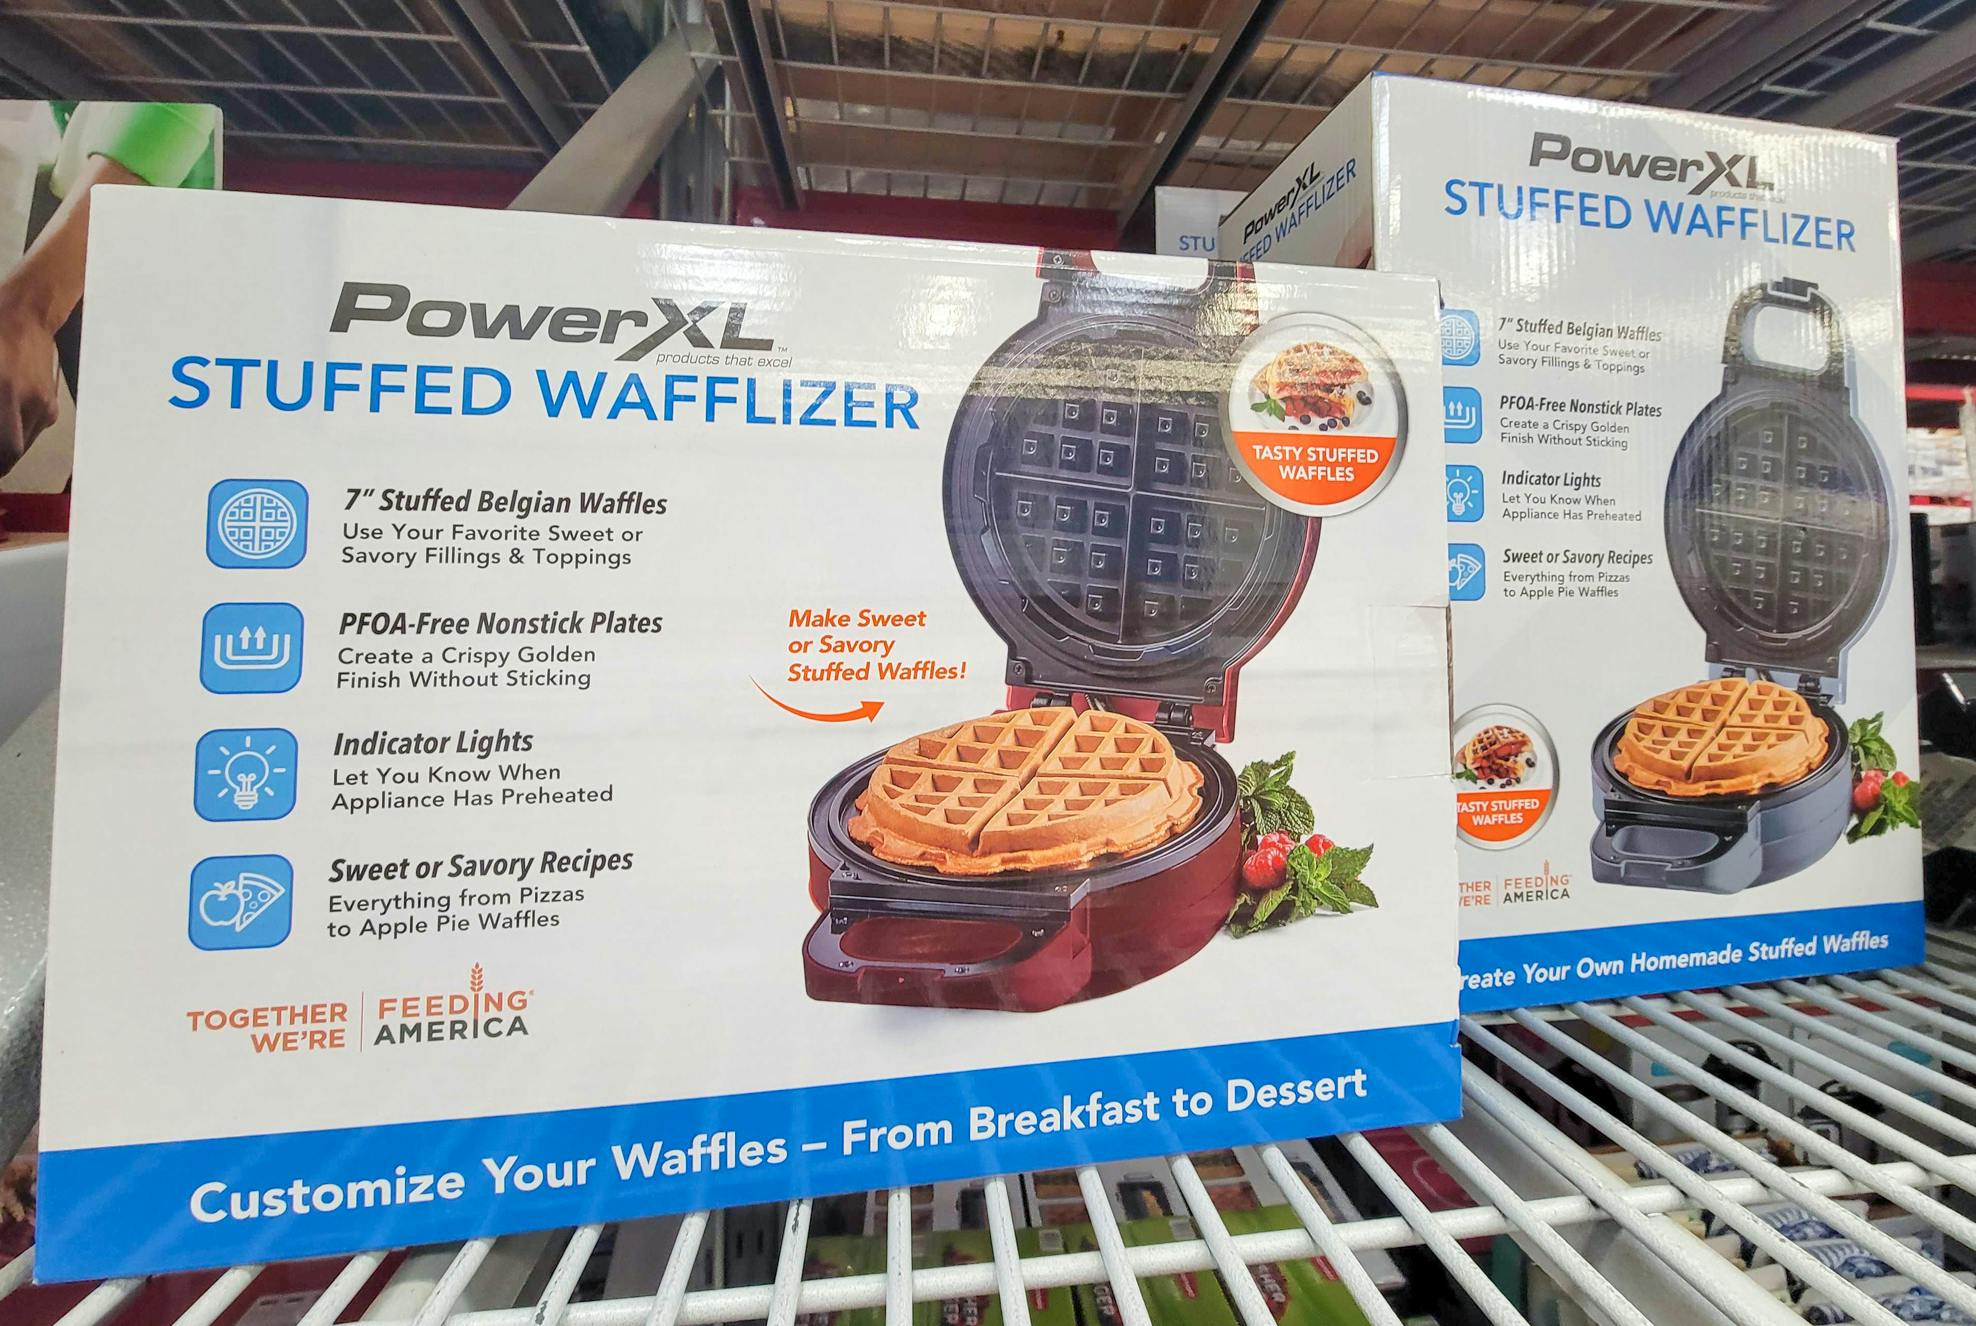 Power XL Stuffed Wafflizer, 5 Waffle Maker